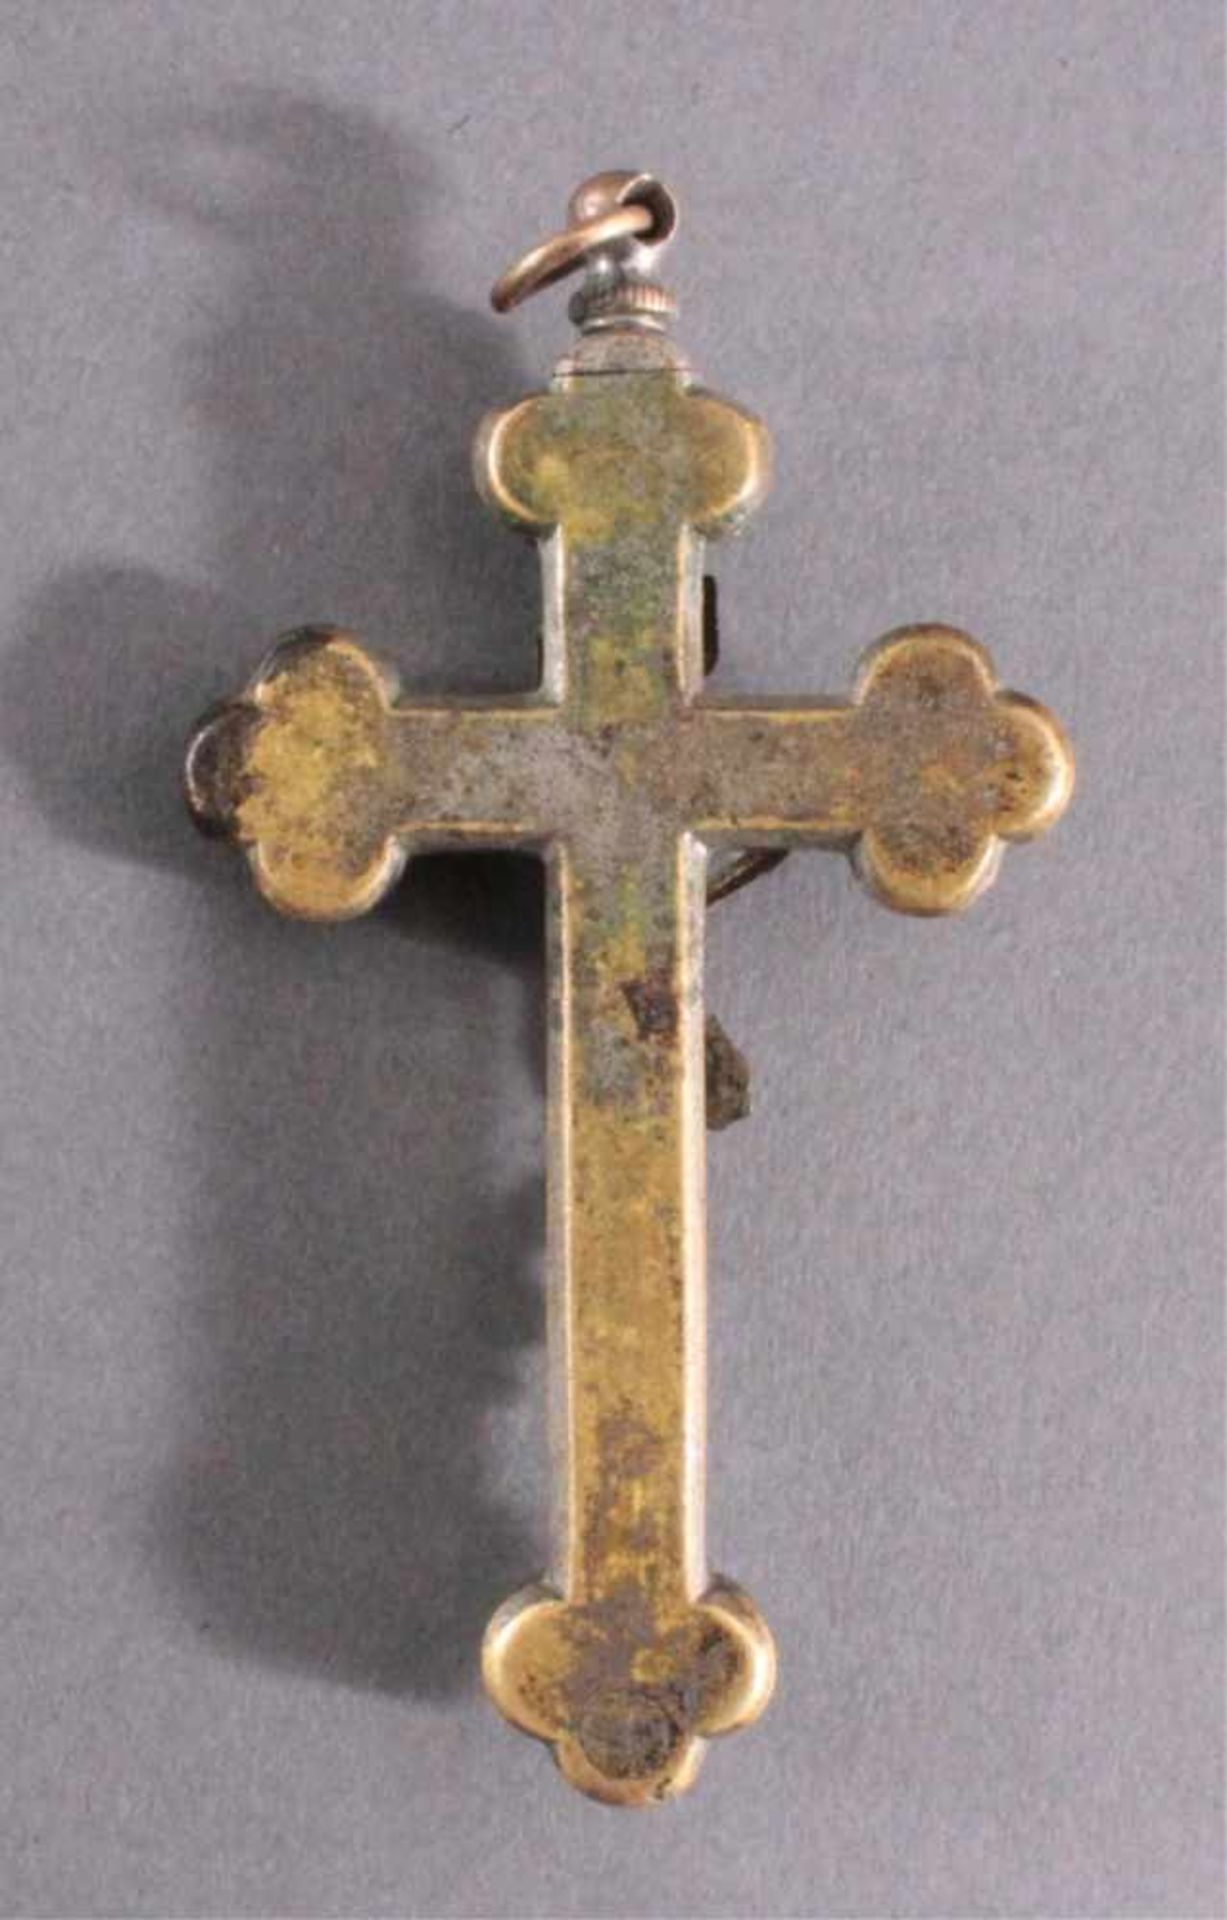 Klosterarbeit - Reliquienkreuz, 19. JahrhundertMessing. Zum Öffnen als Reliquienkreuze, darin - Bild 4 aus 4